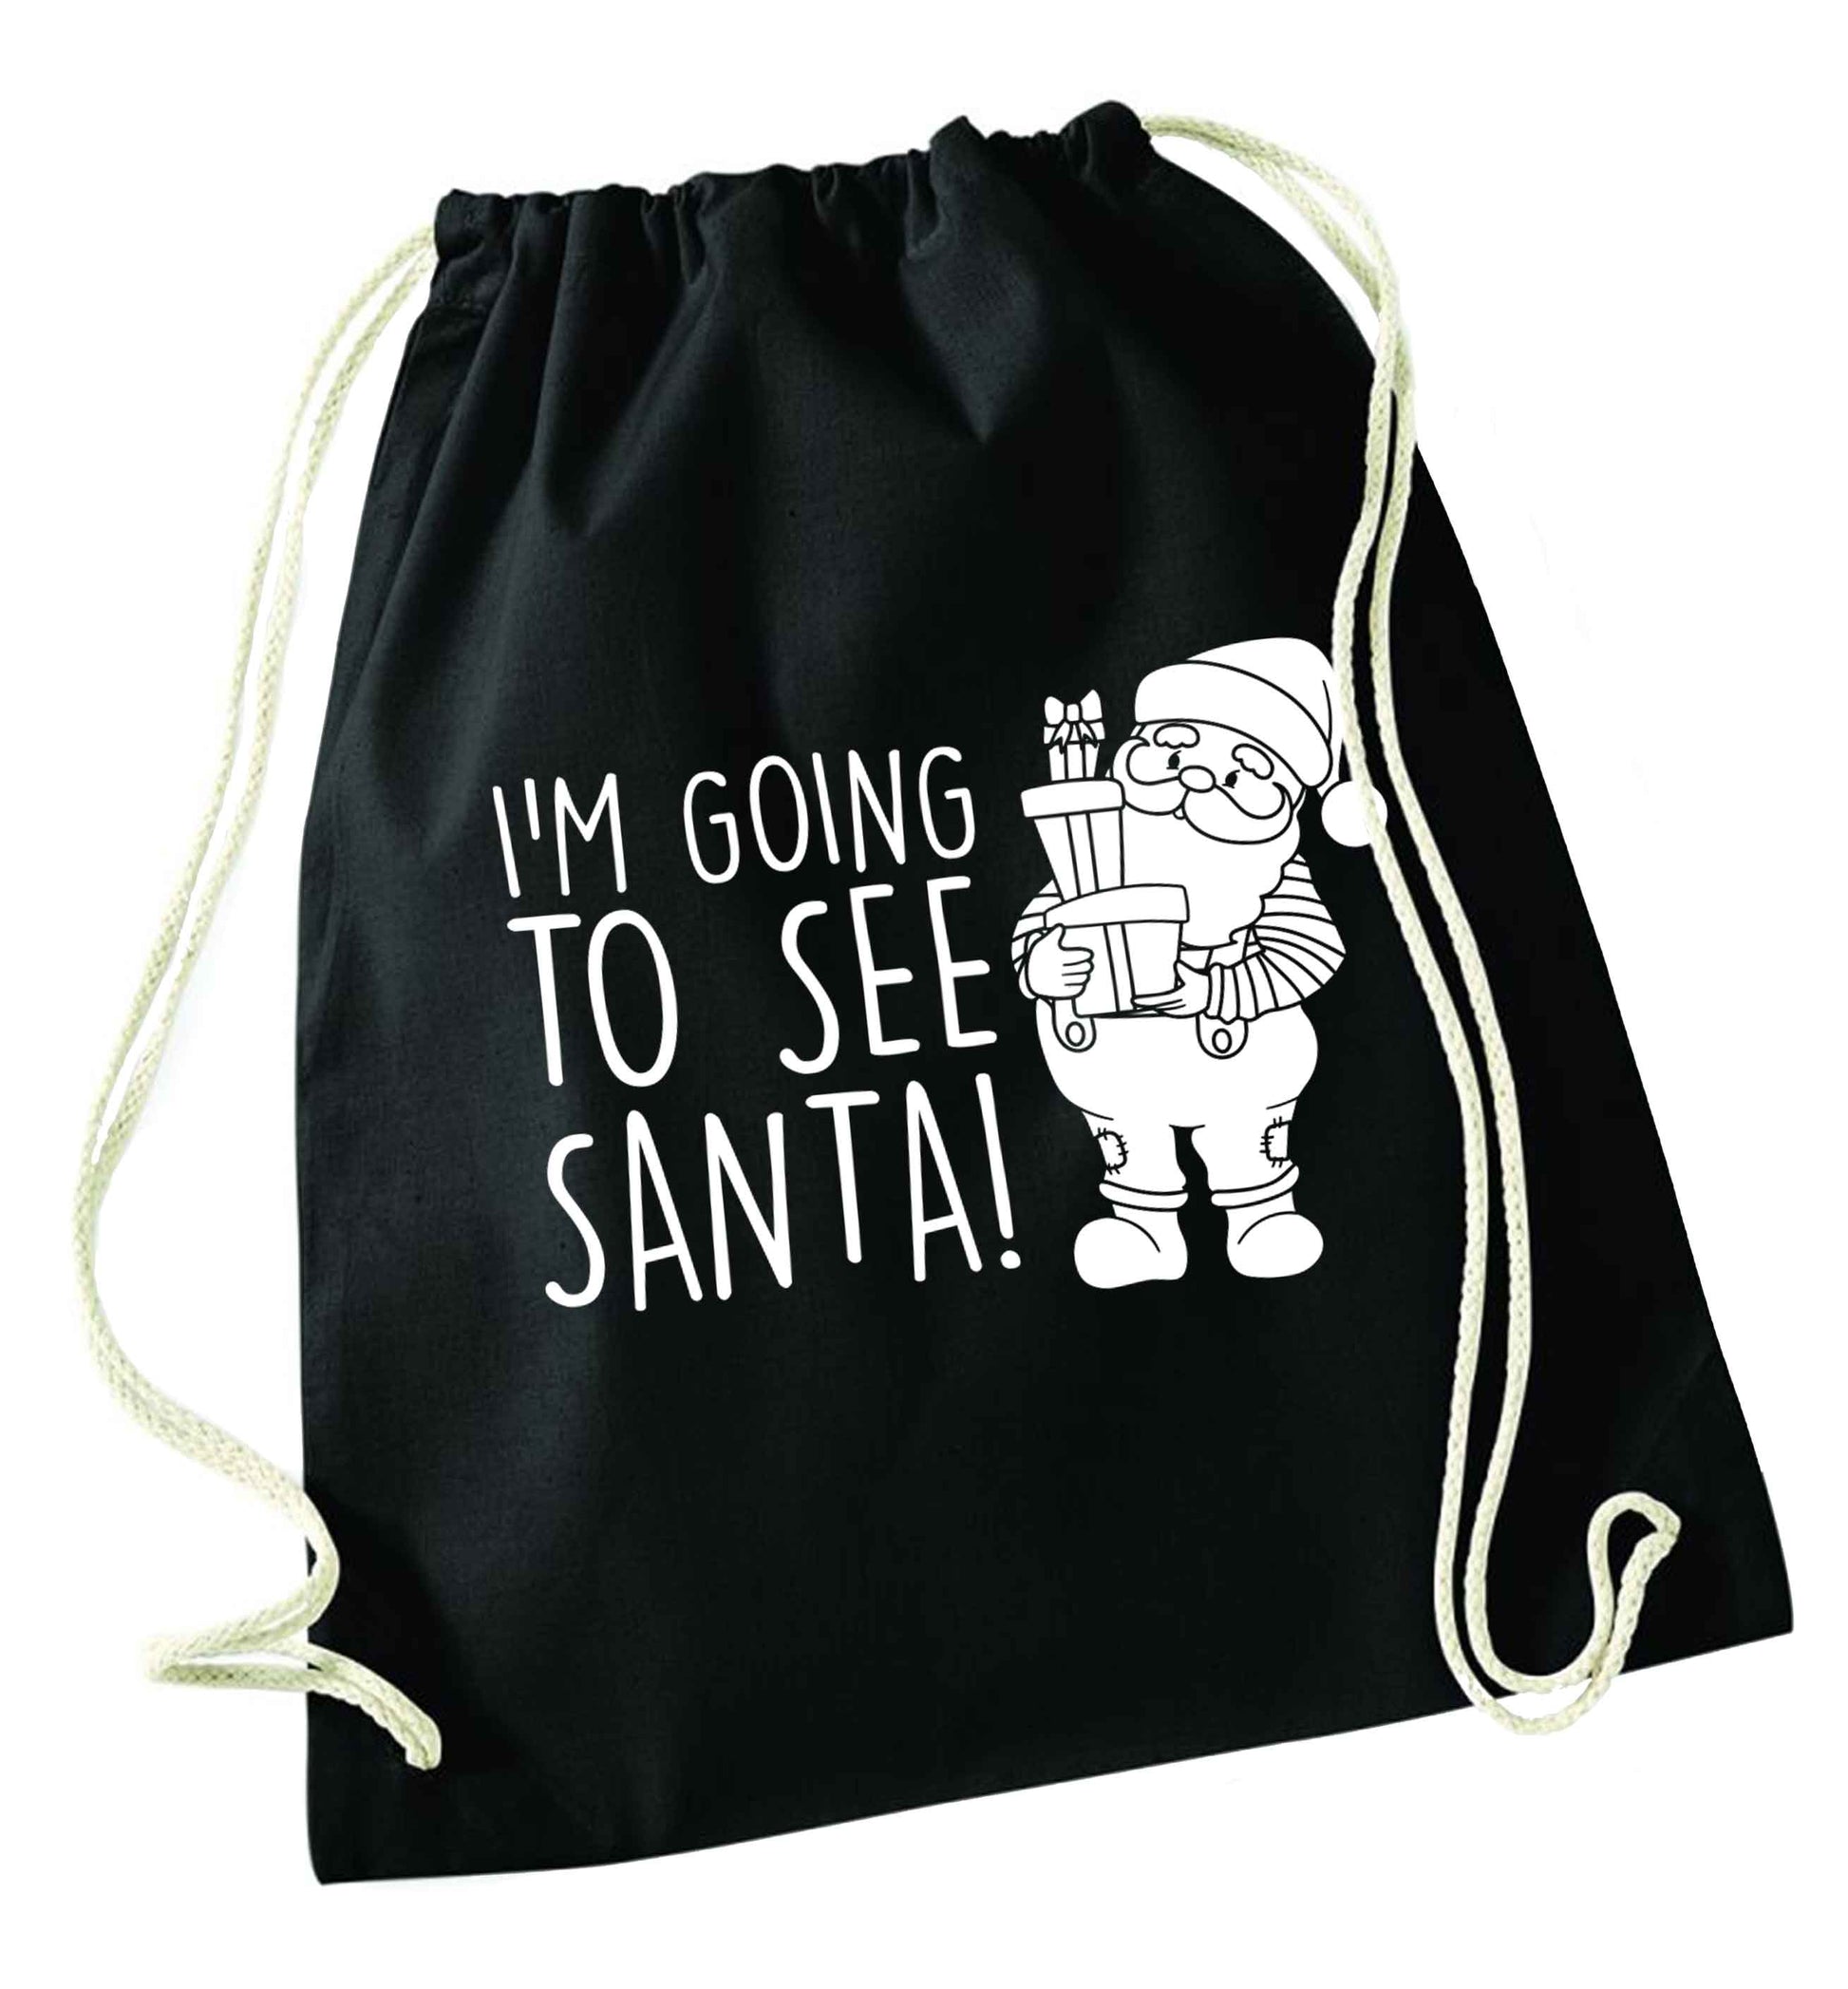 Merry Christmas black drawstring bag